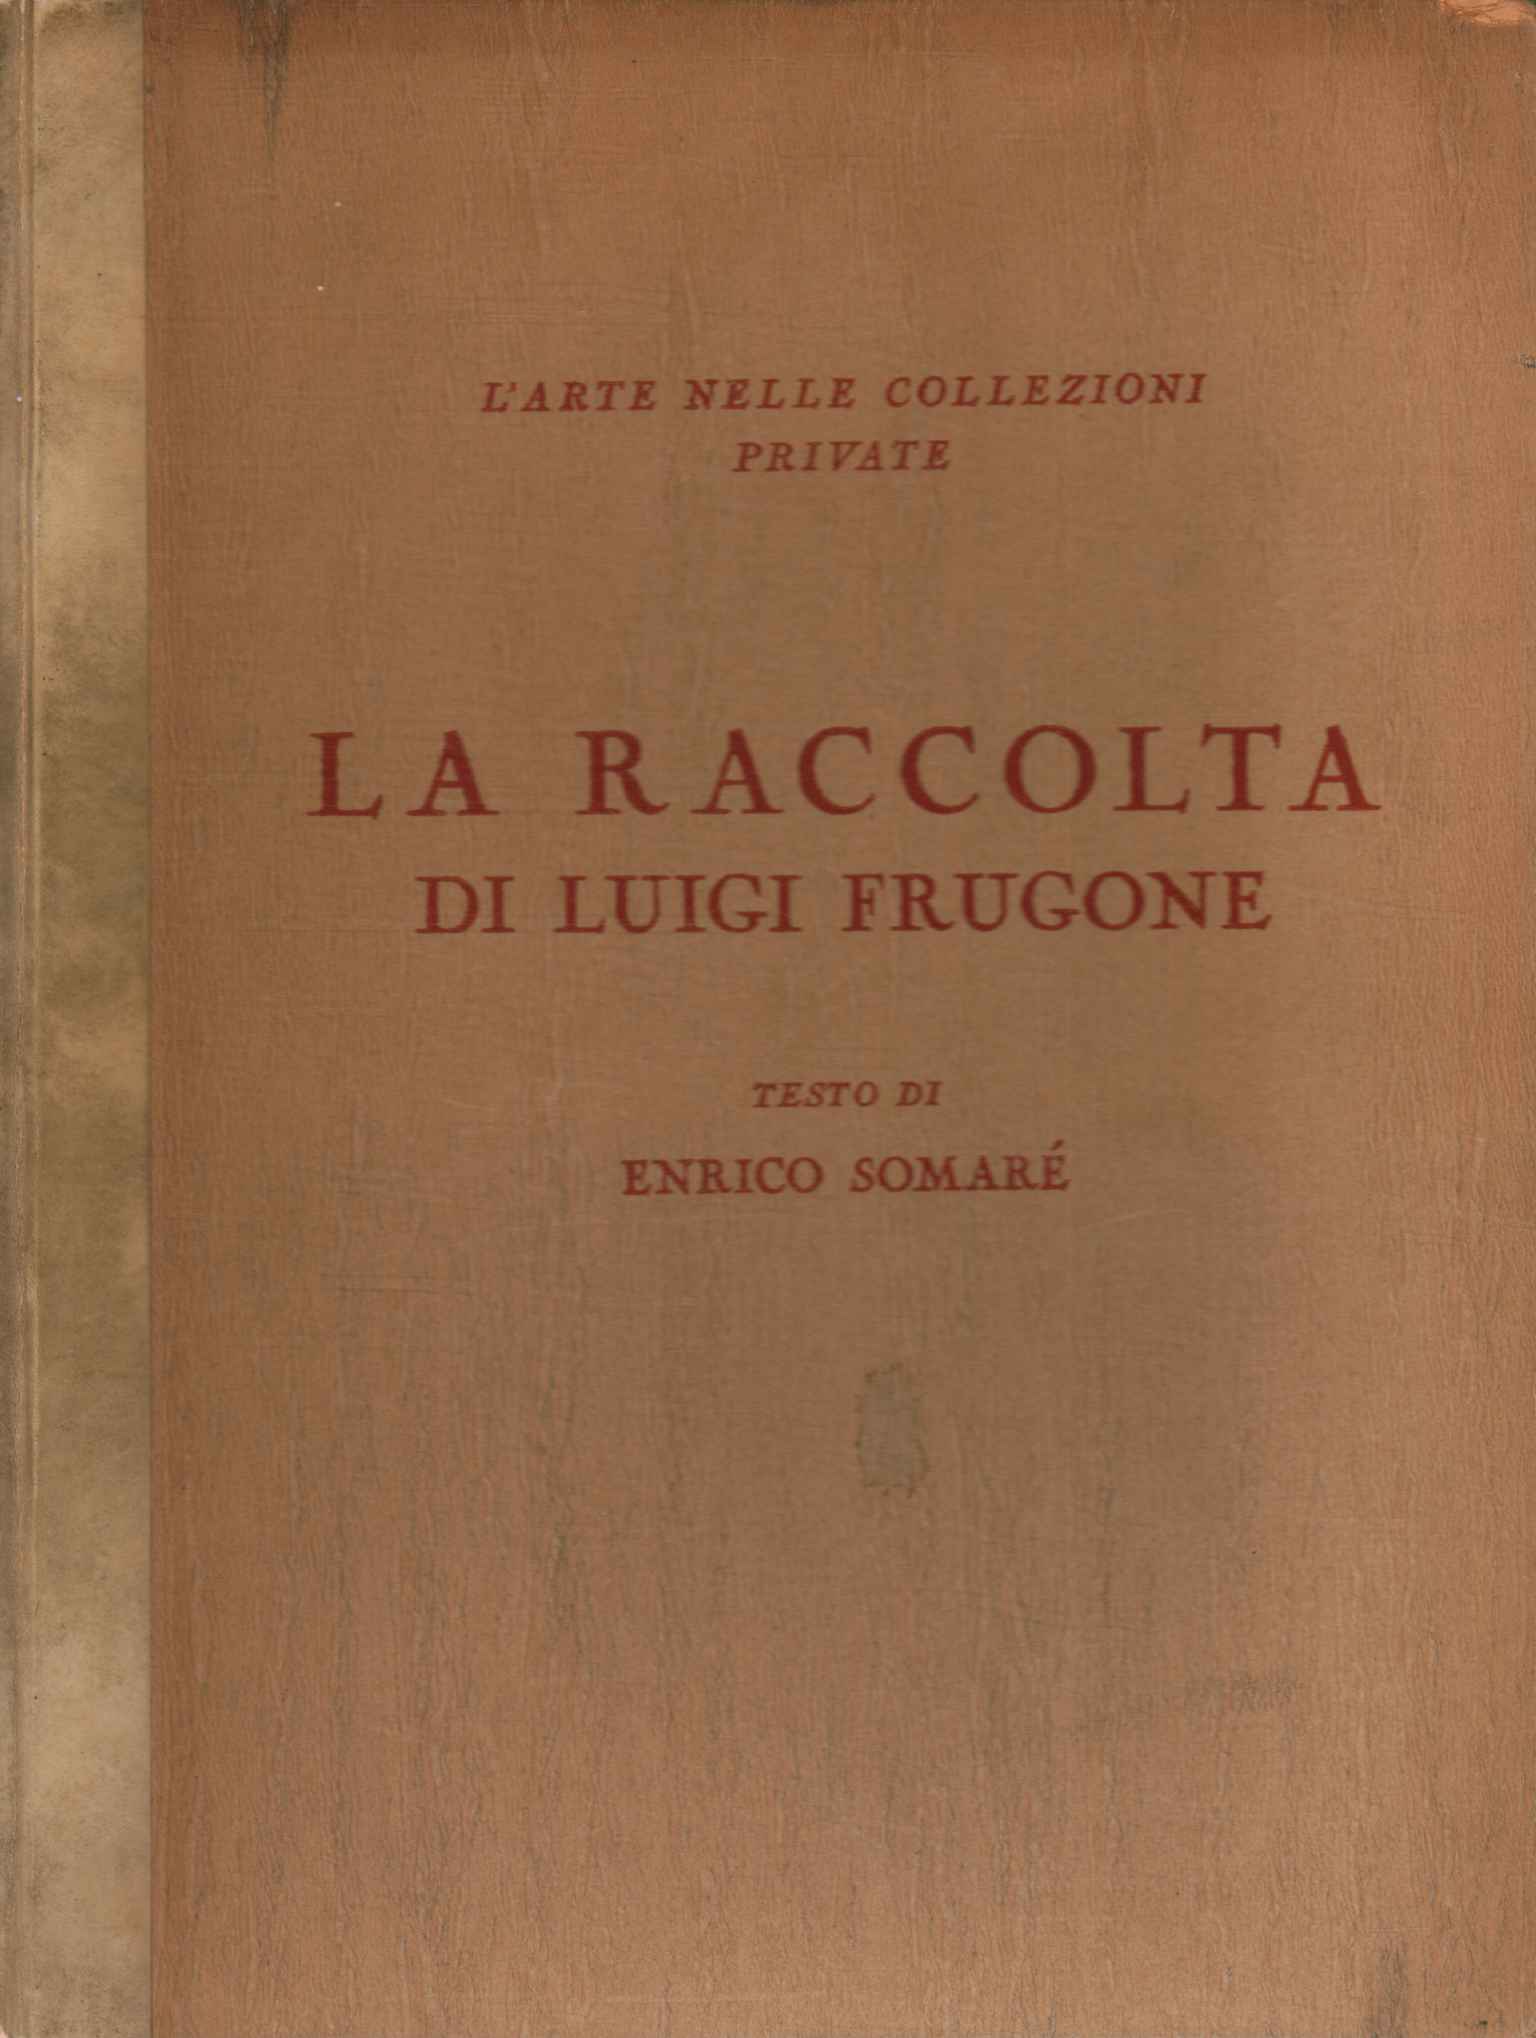 Luigi Frugone's collection